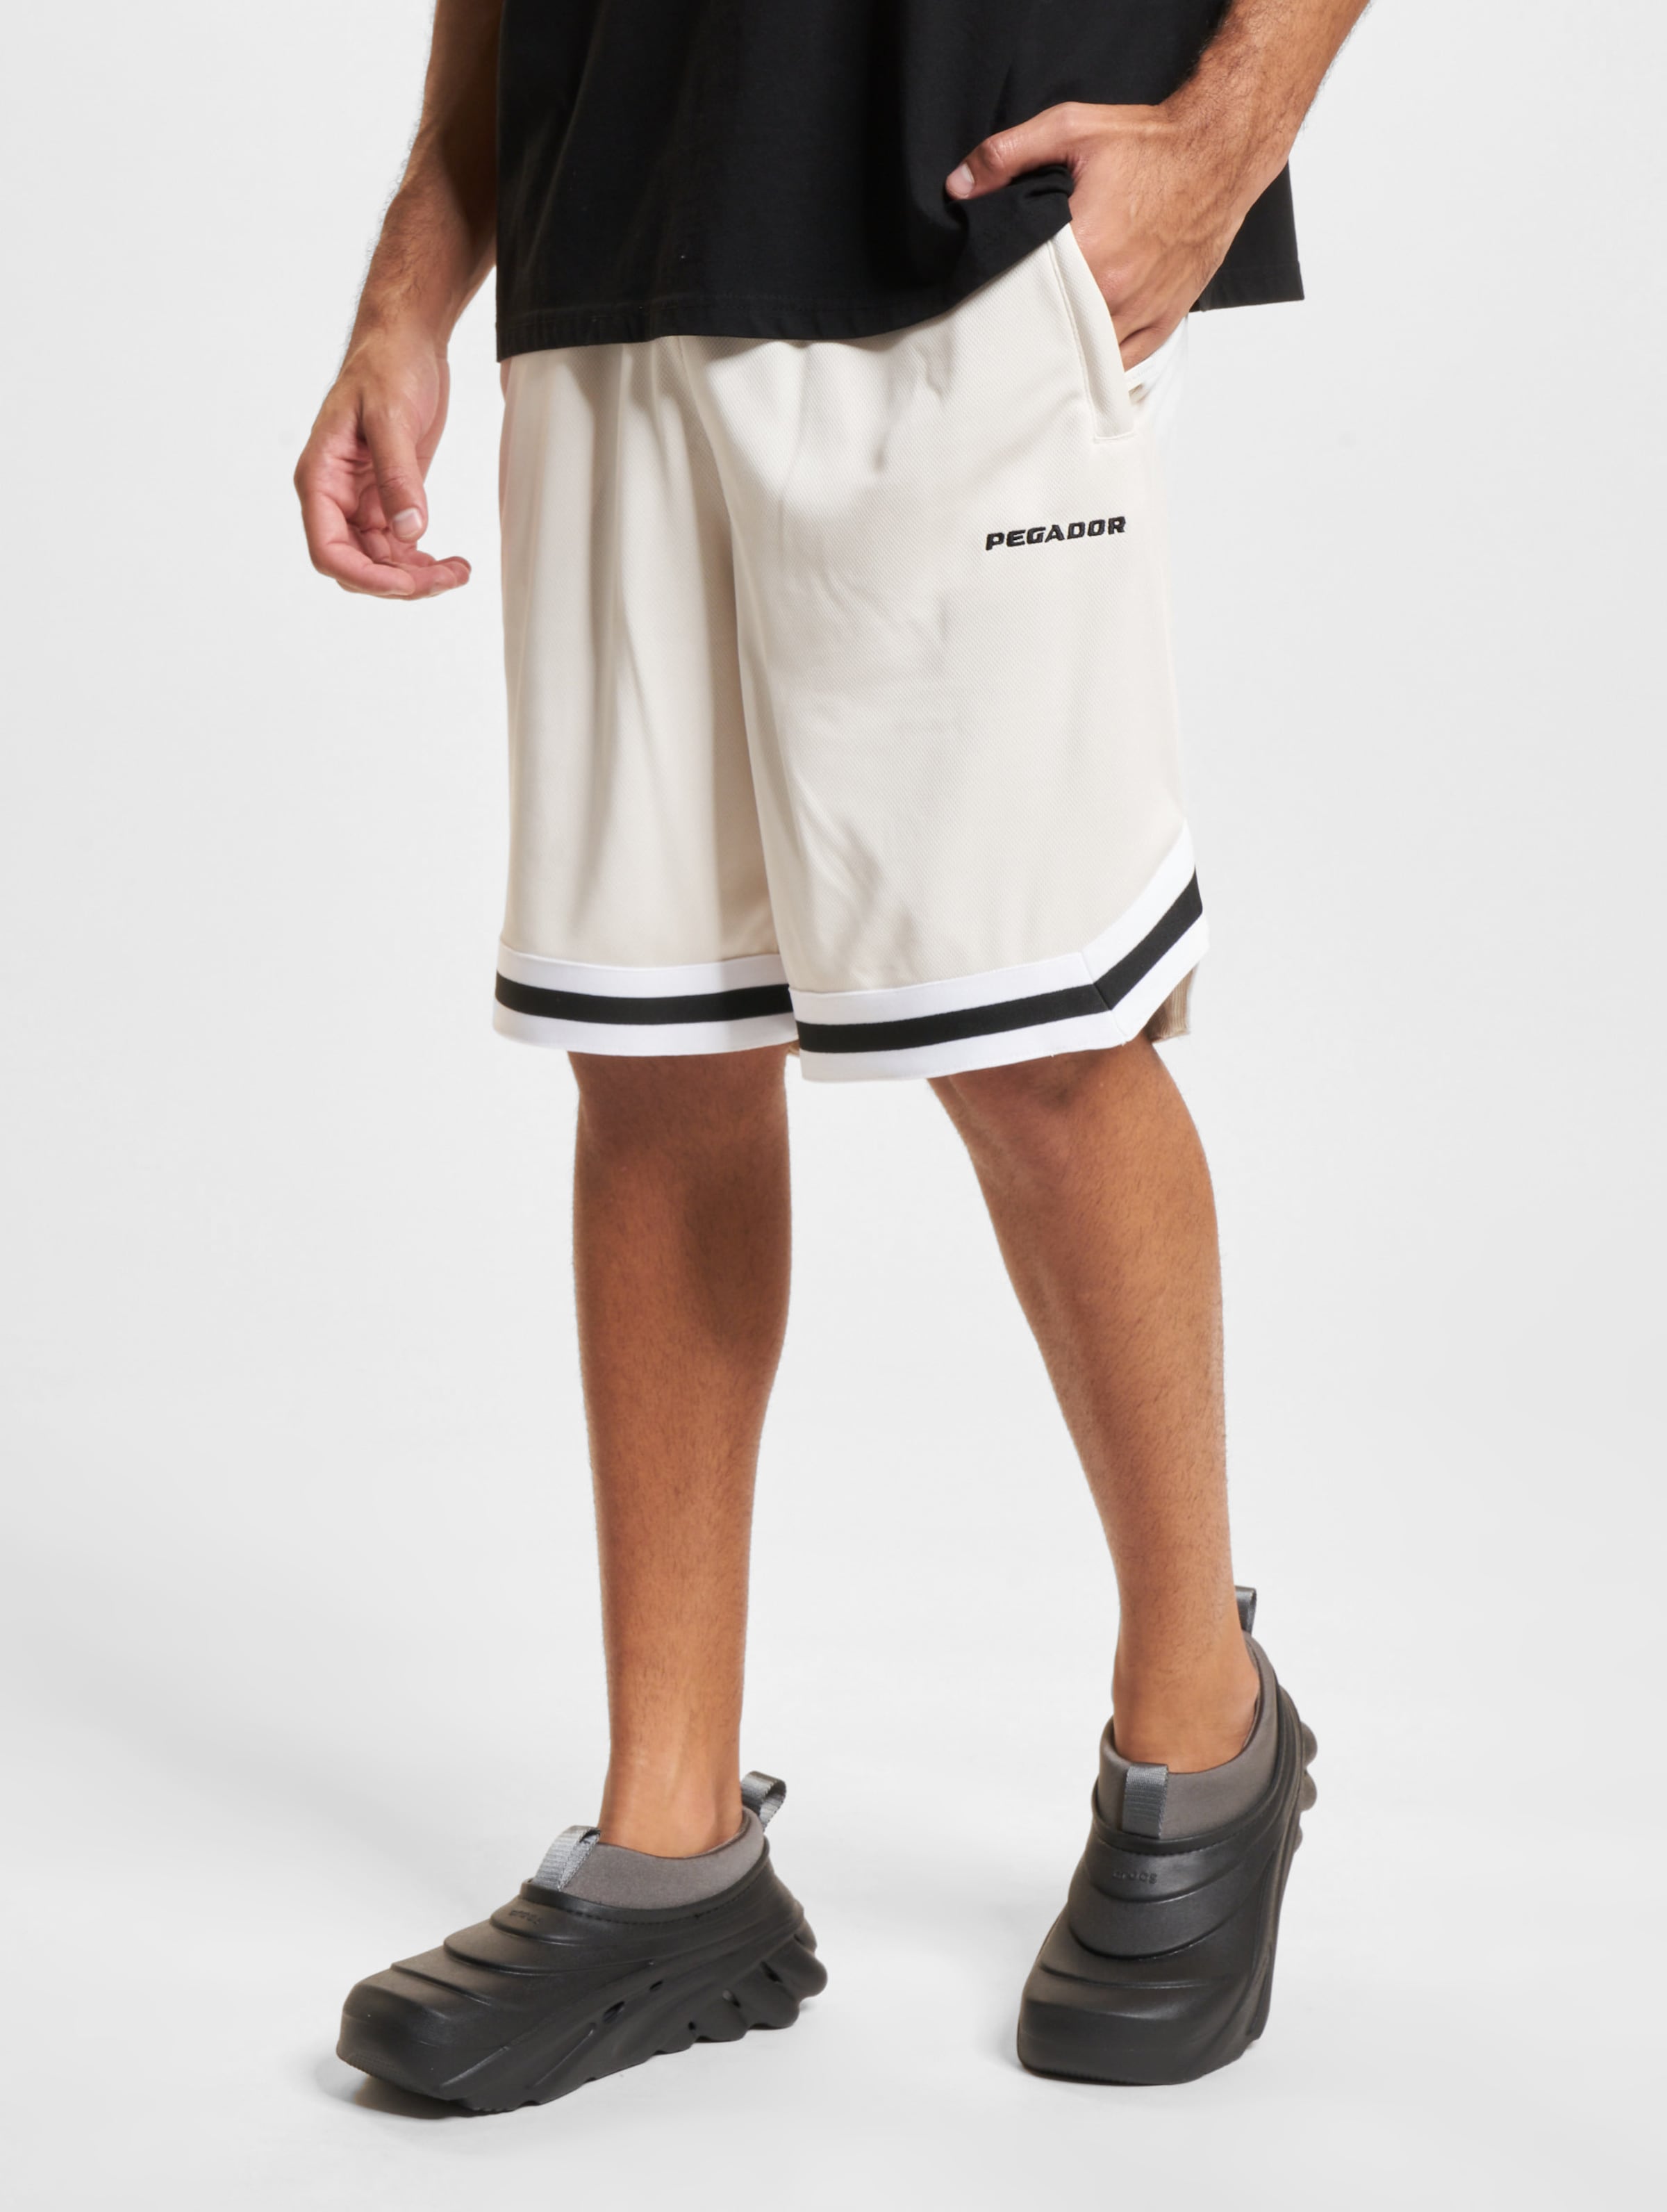 PEGADOR Lansing Basketball Shorts Männer,Unisex op kleur wit, Maat L